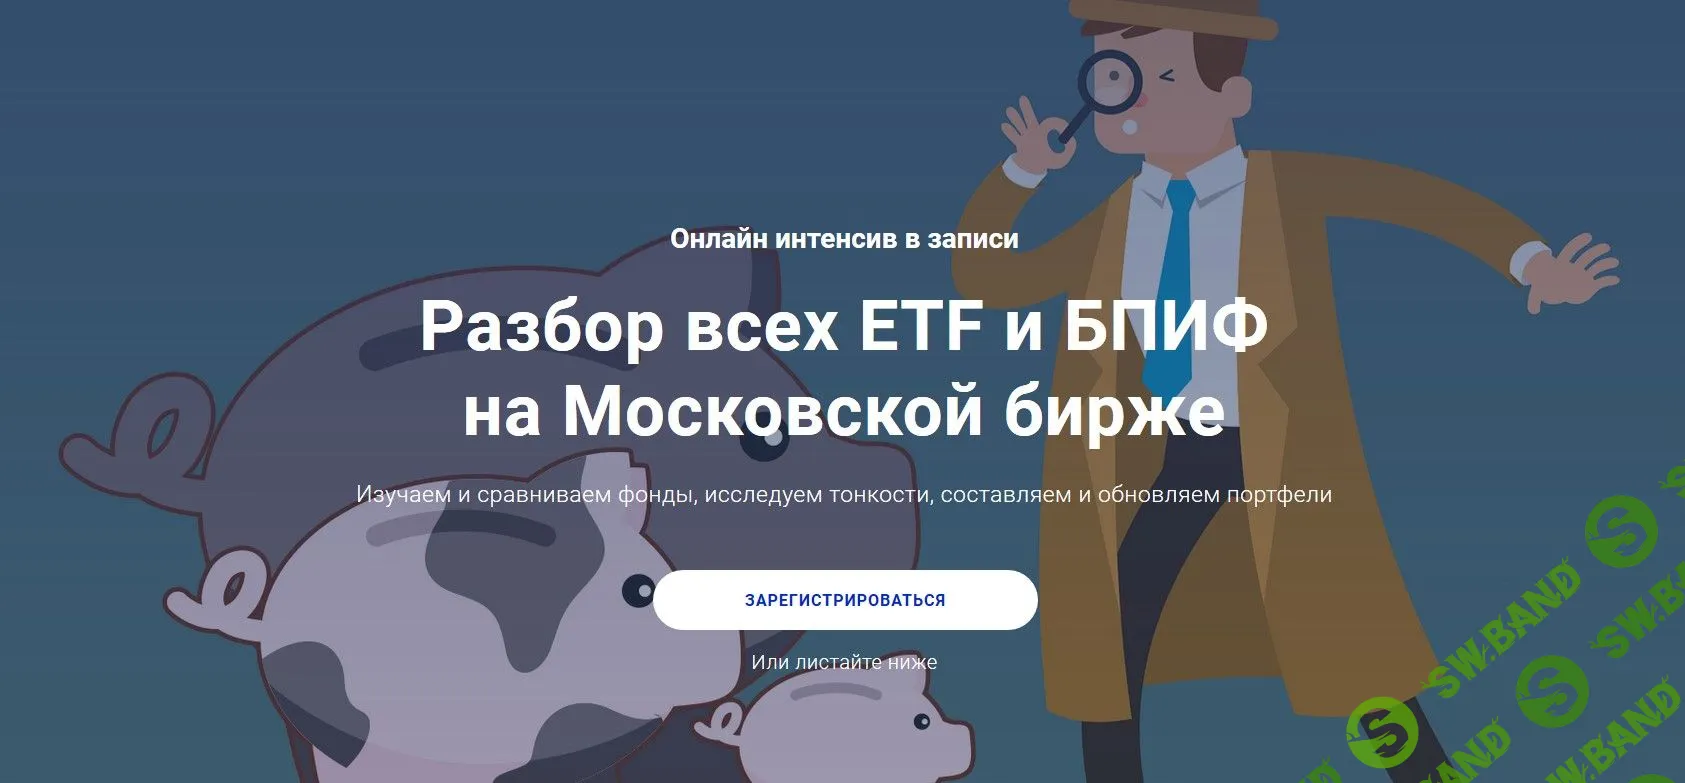 [Филипп Астраханцев] Разбор всех ETF и БПИФ на Московской бирже (2020)